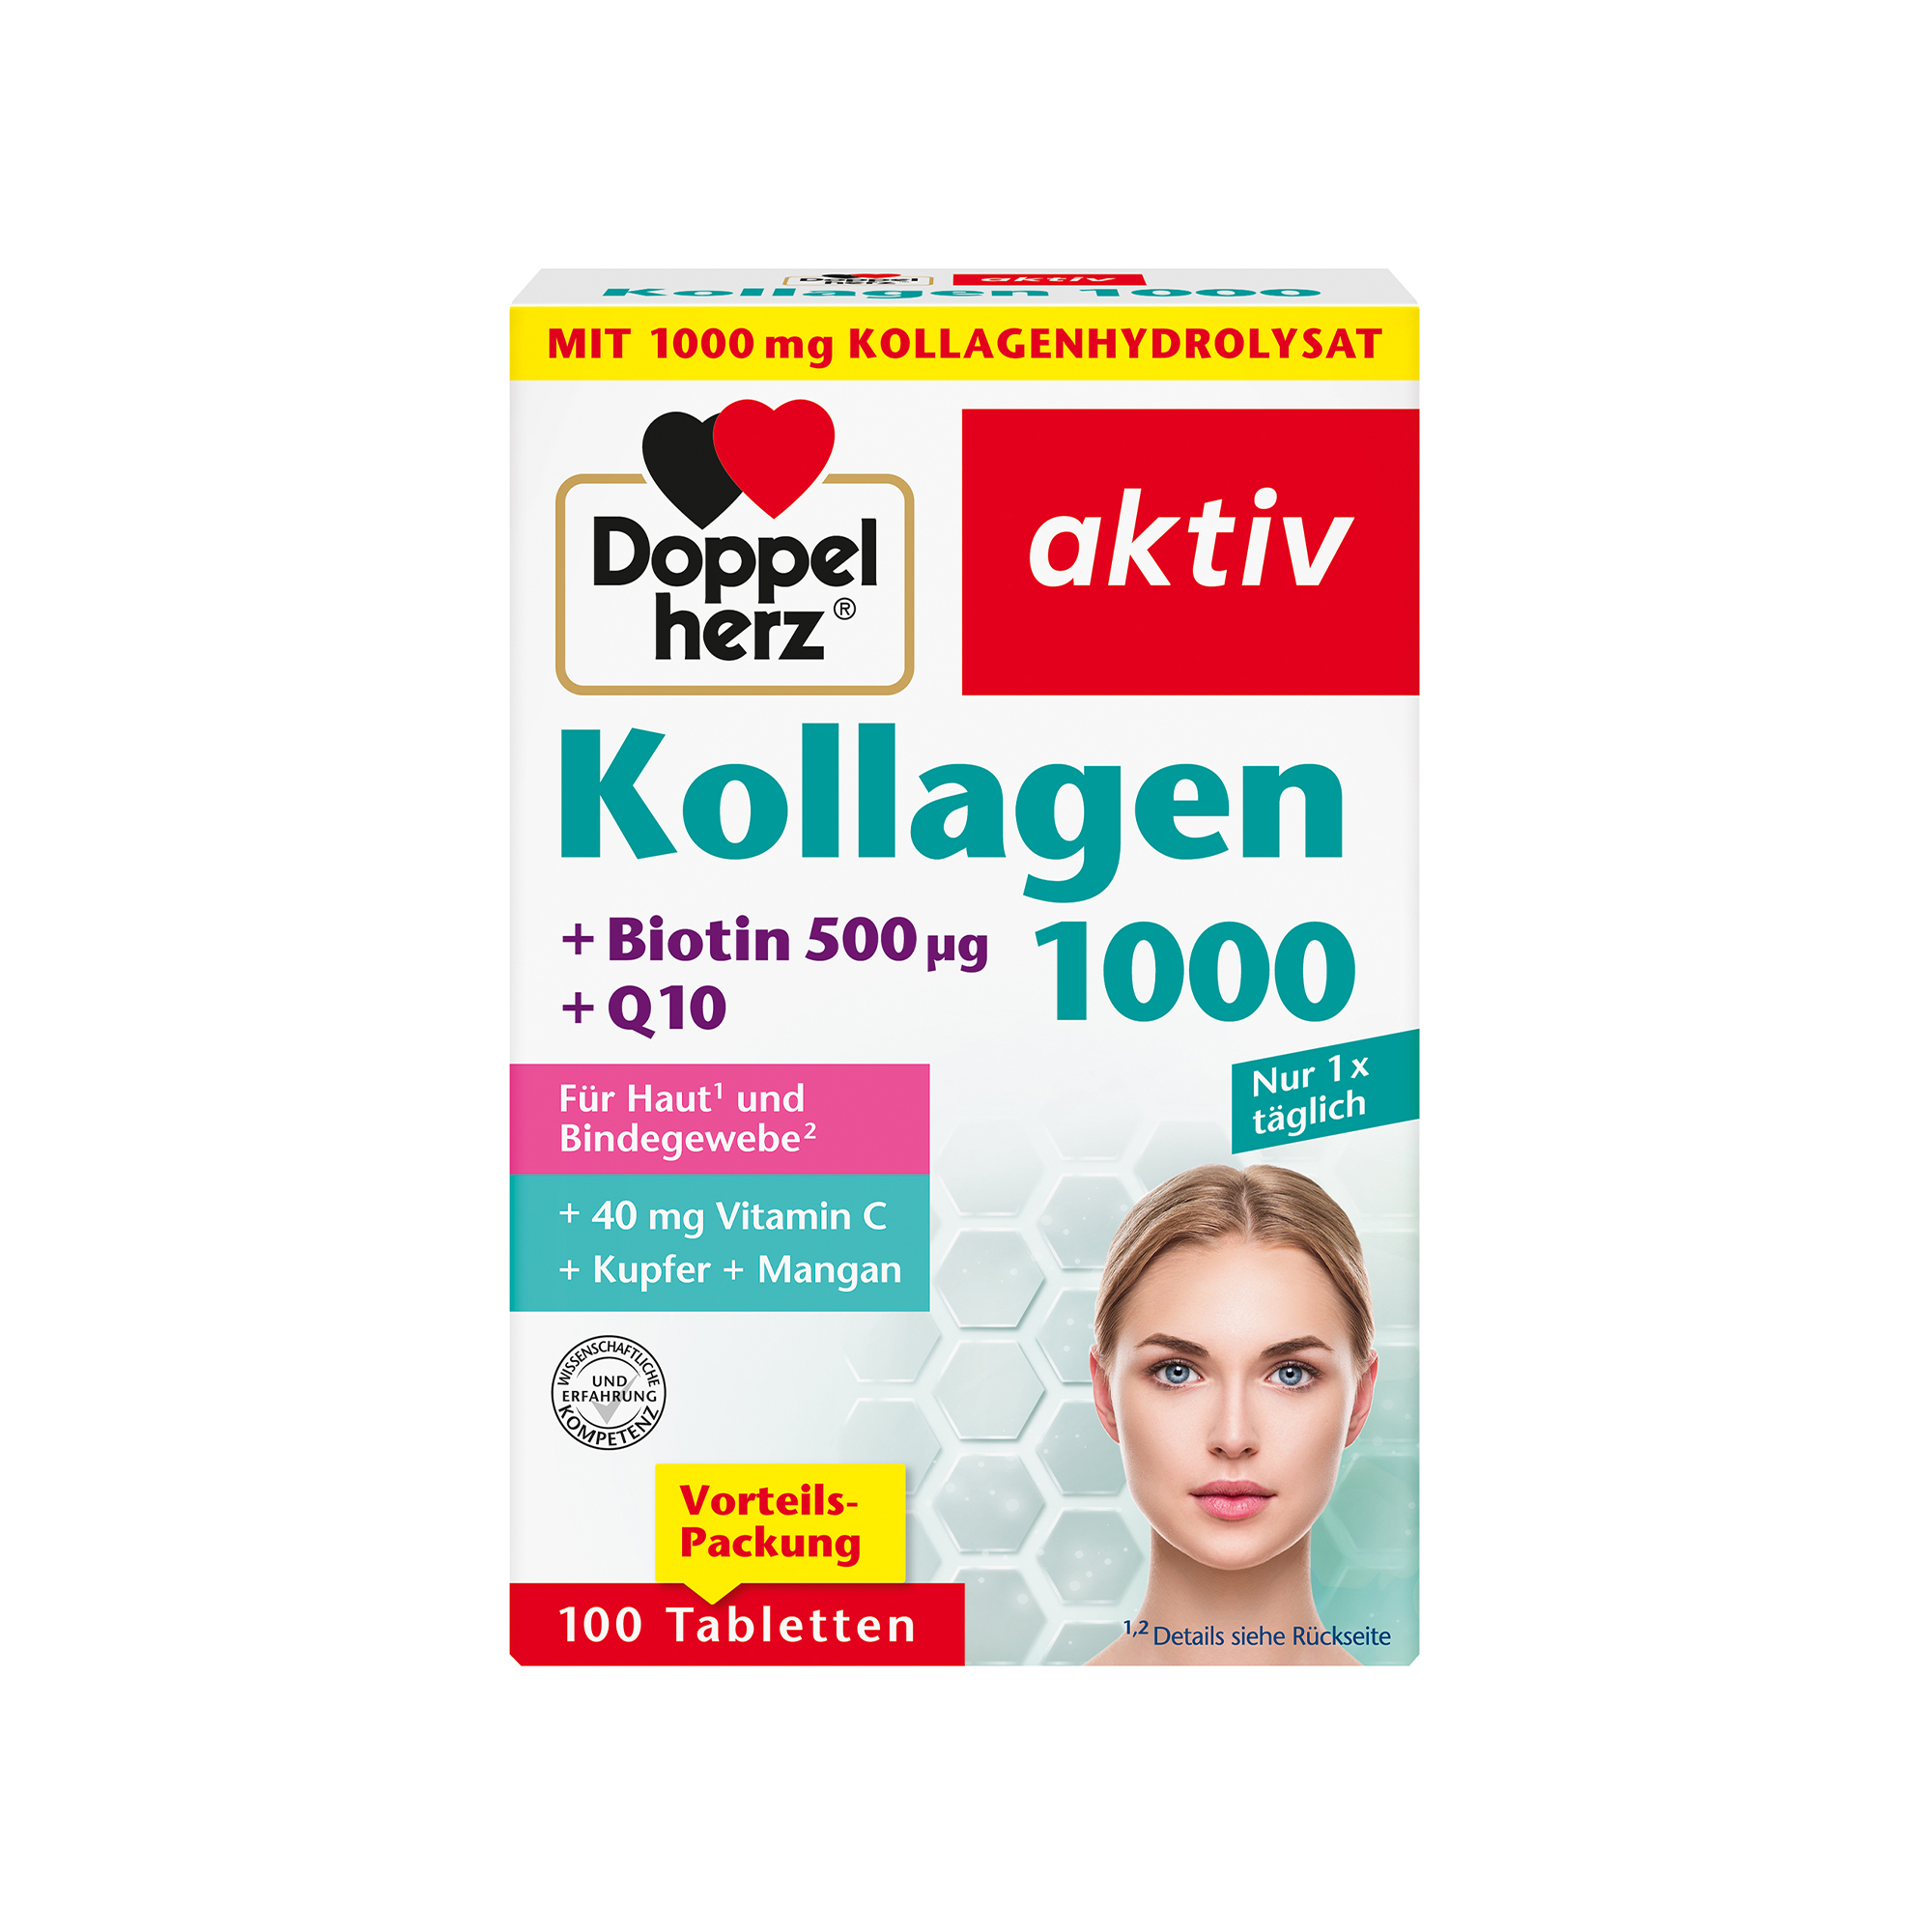 Doppelherz aktiv Collagen 1000, 100 Tablets